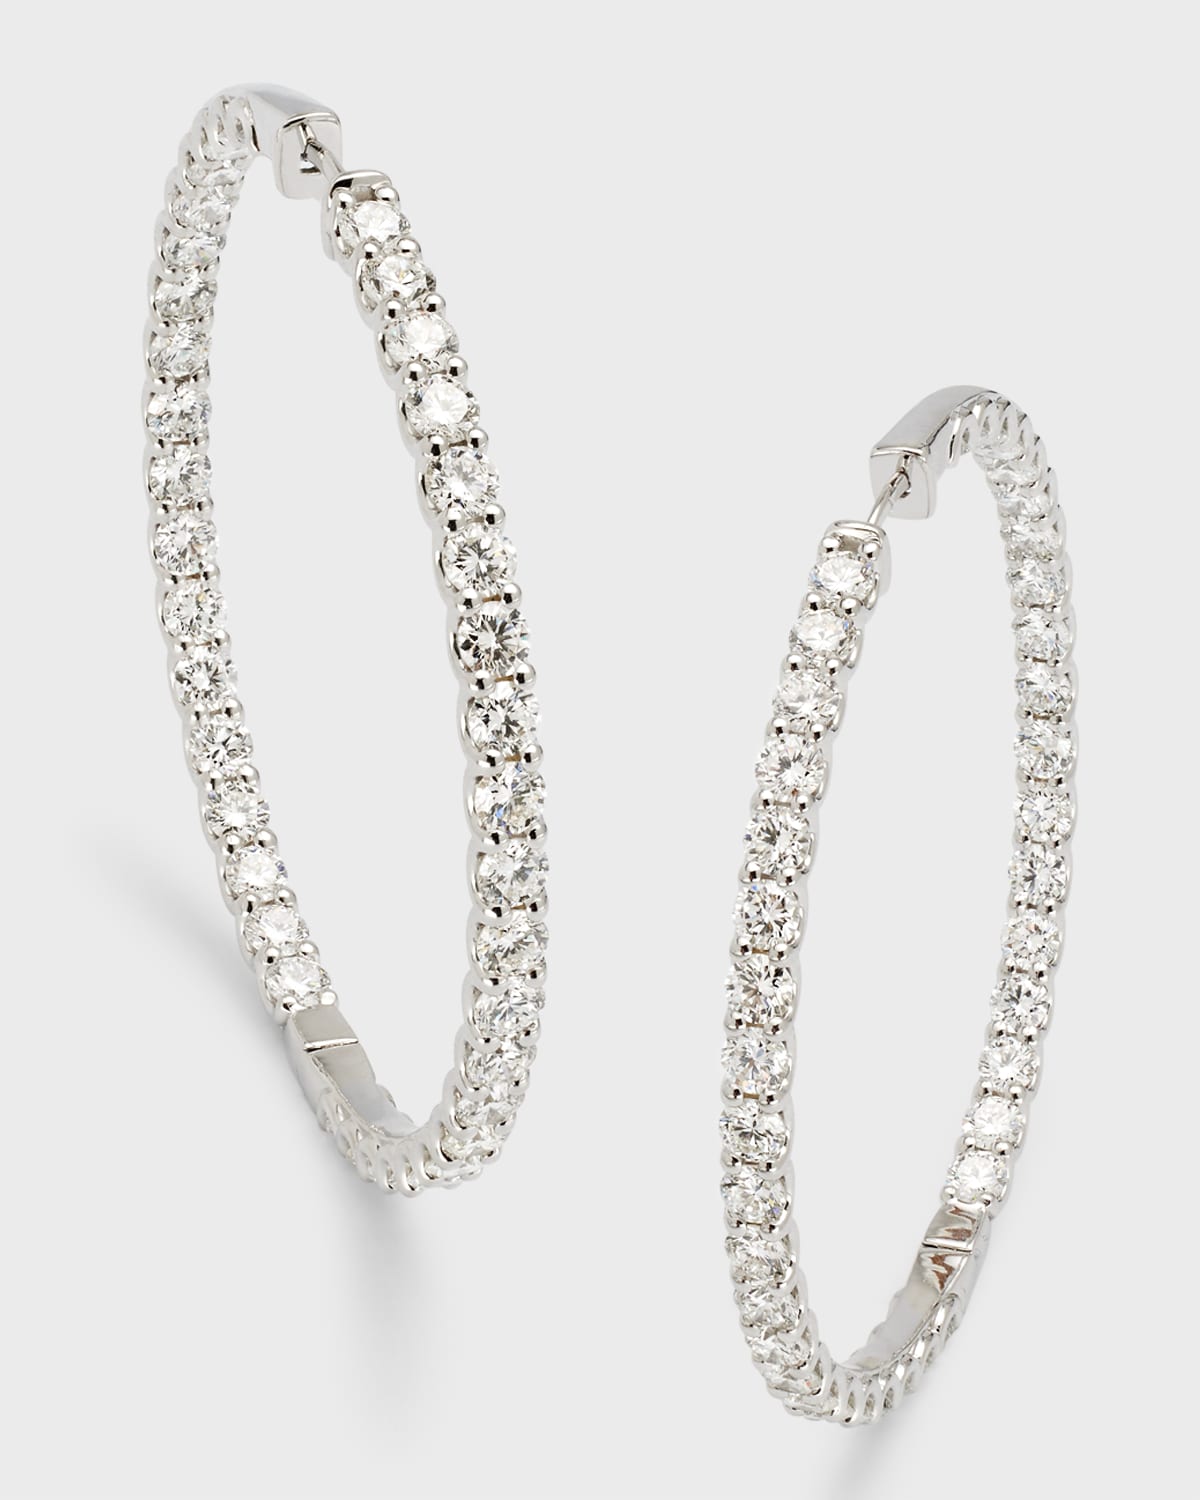 Lab Grown Diamond 18K White Gold Round Hoop Earrings, 2"L, 9.75tcw